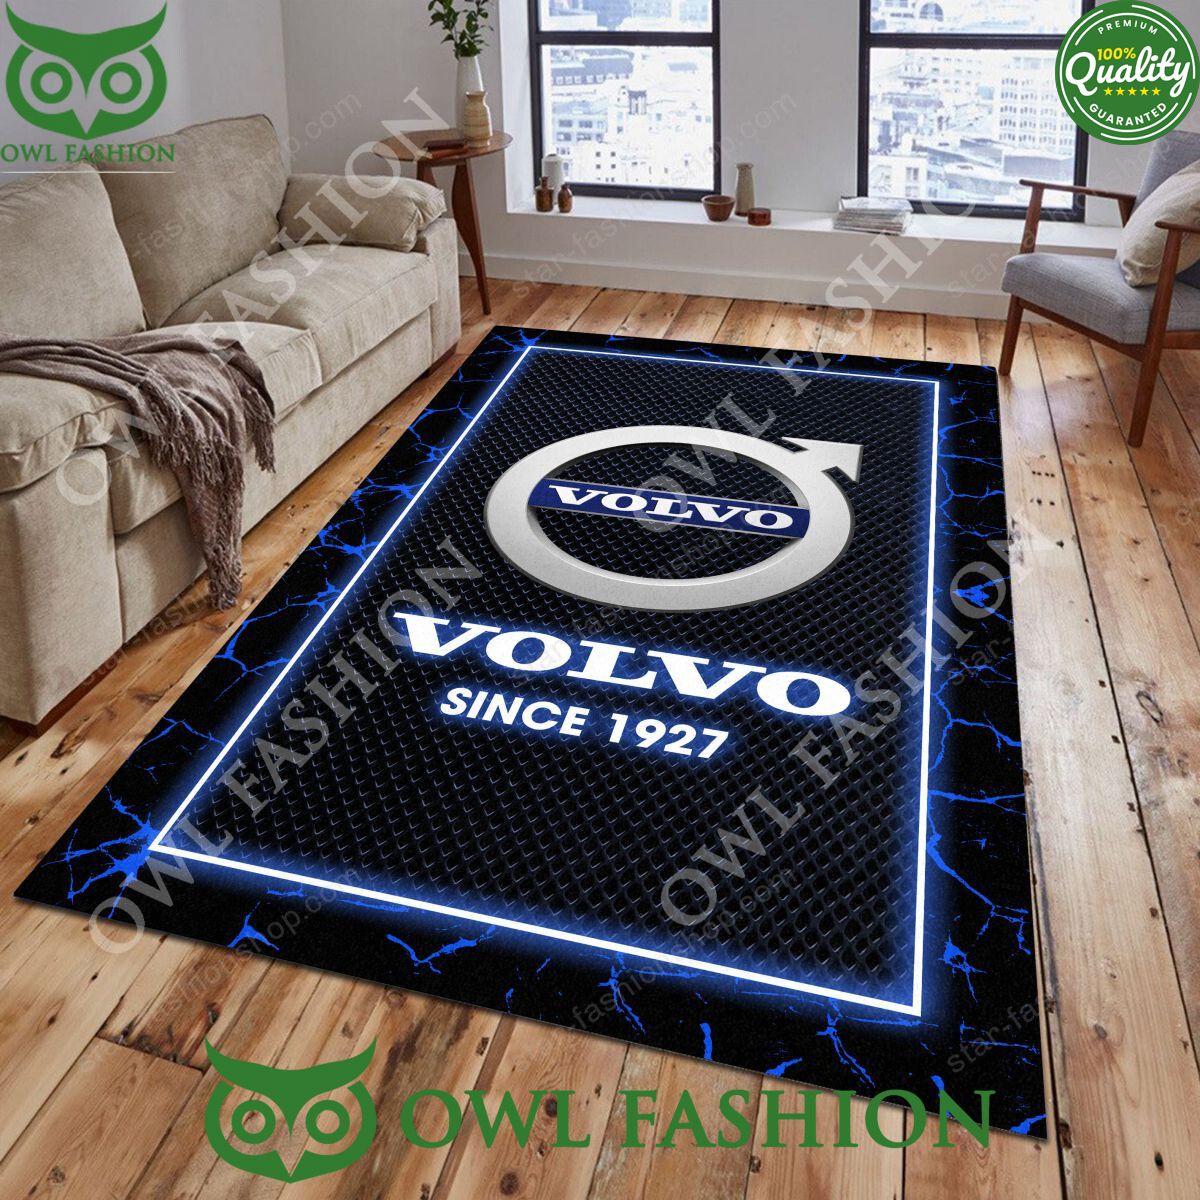 volvo electric suv rug carpet decor living room 1 lnLK4.jpg